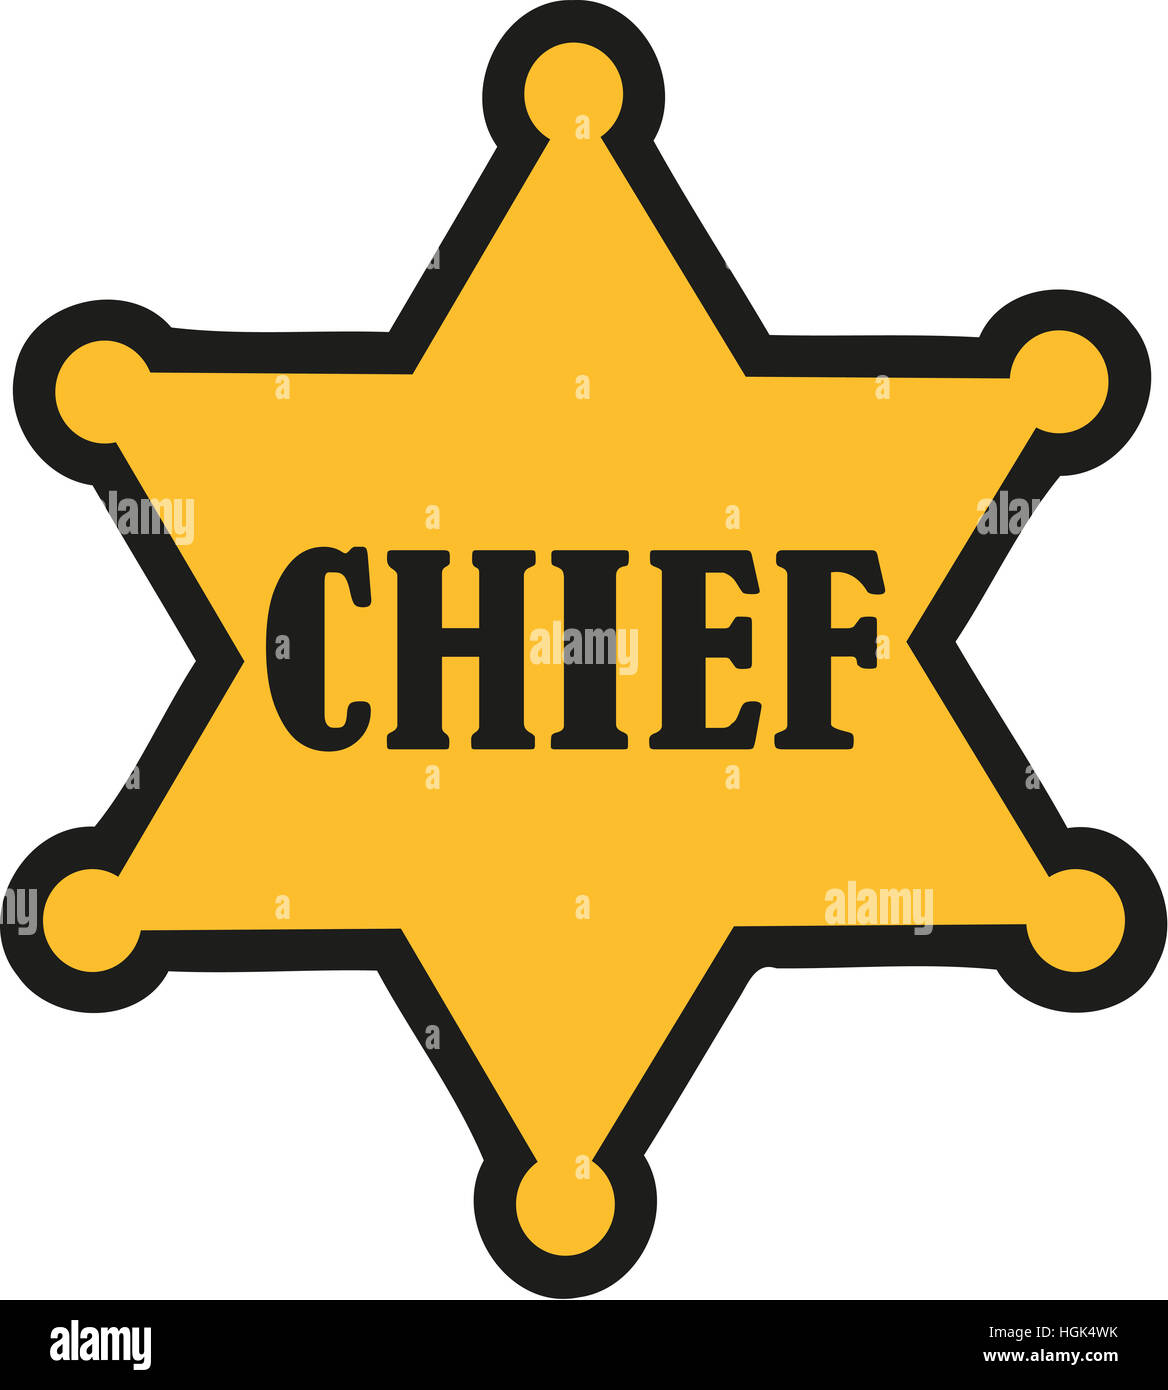 Chief star - sheriff sign Stock Photo